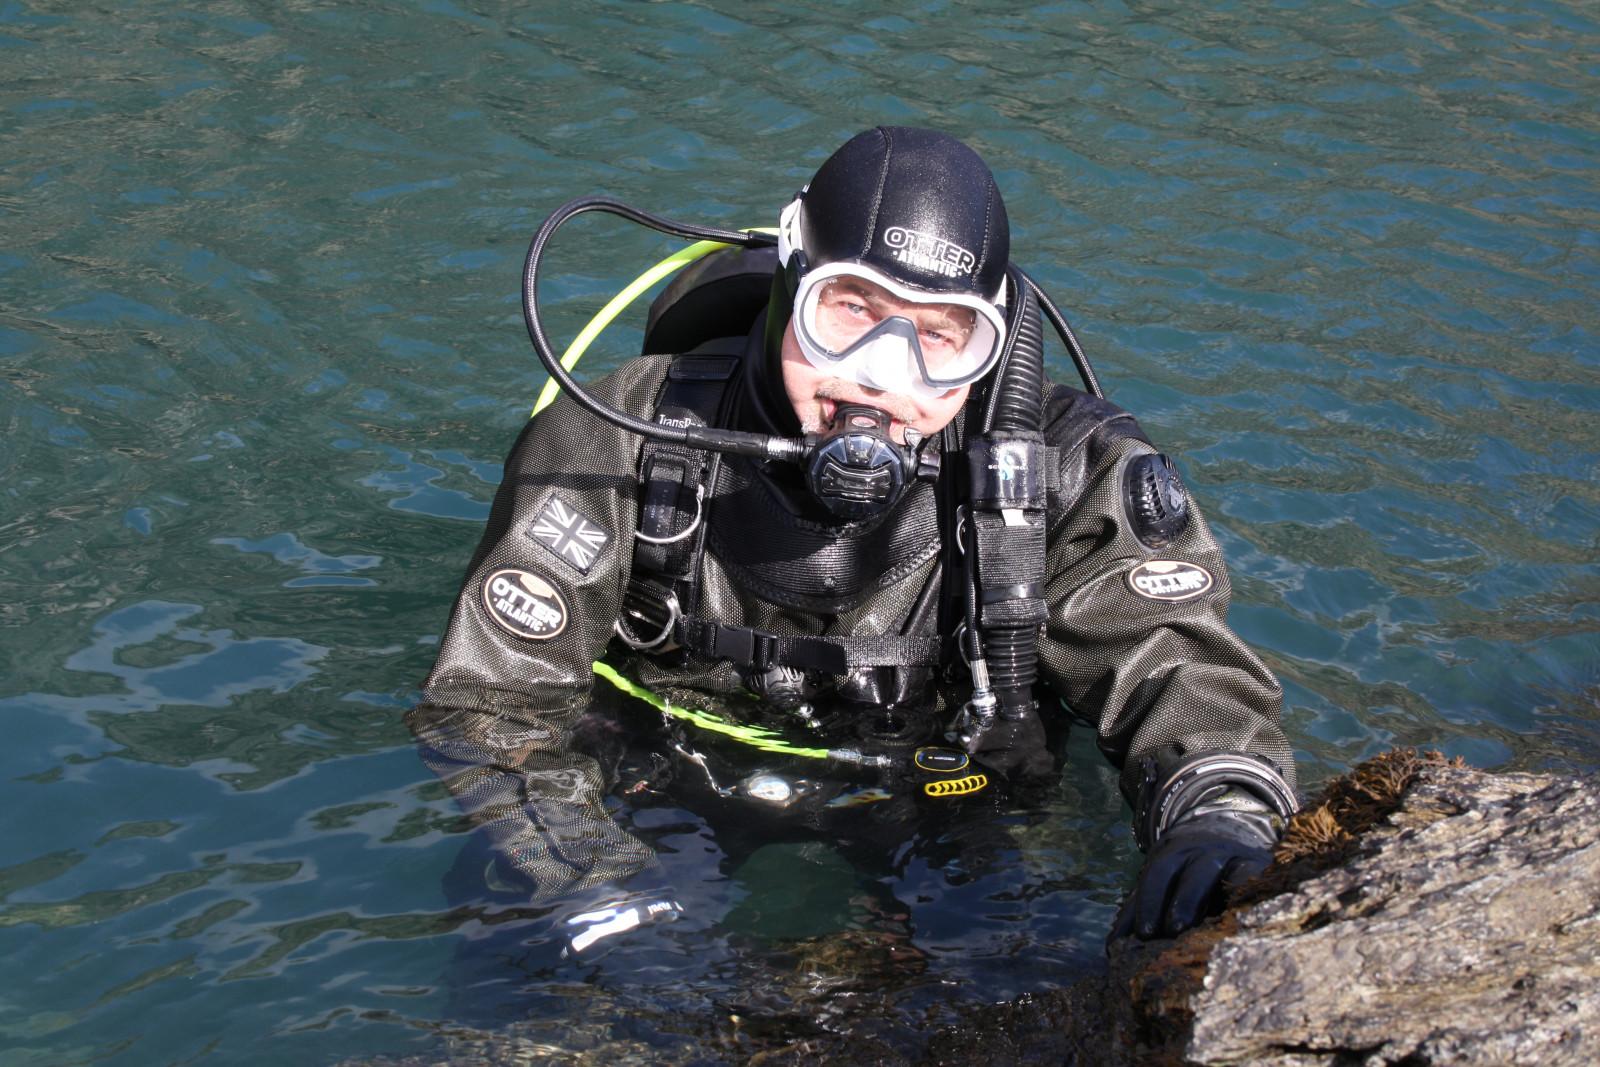 Otter Watersports Atlantic HD Kevlar Drysuit - Scuba Diving Equipment test